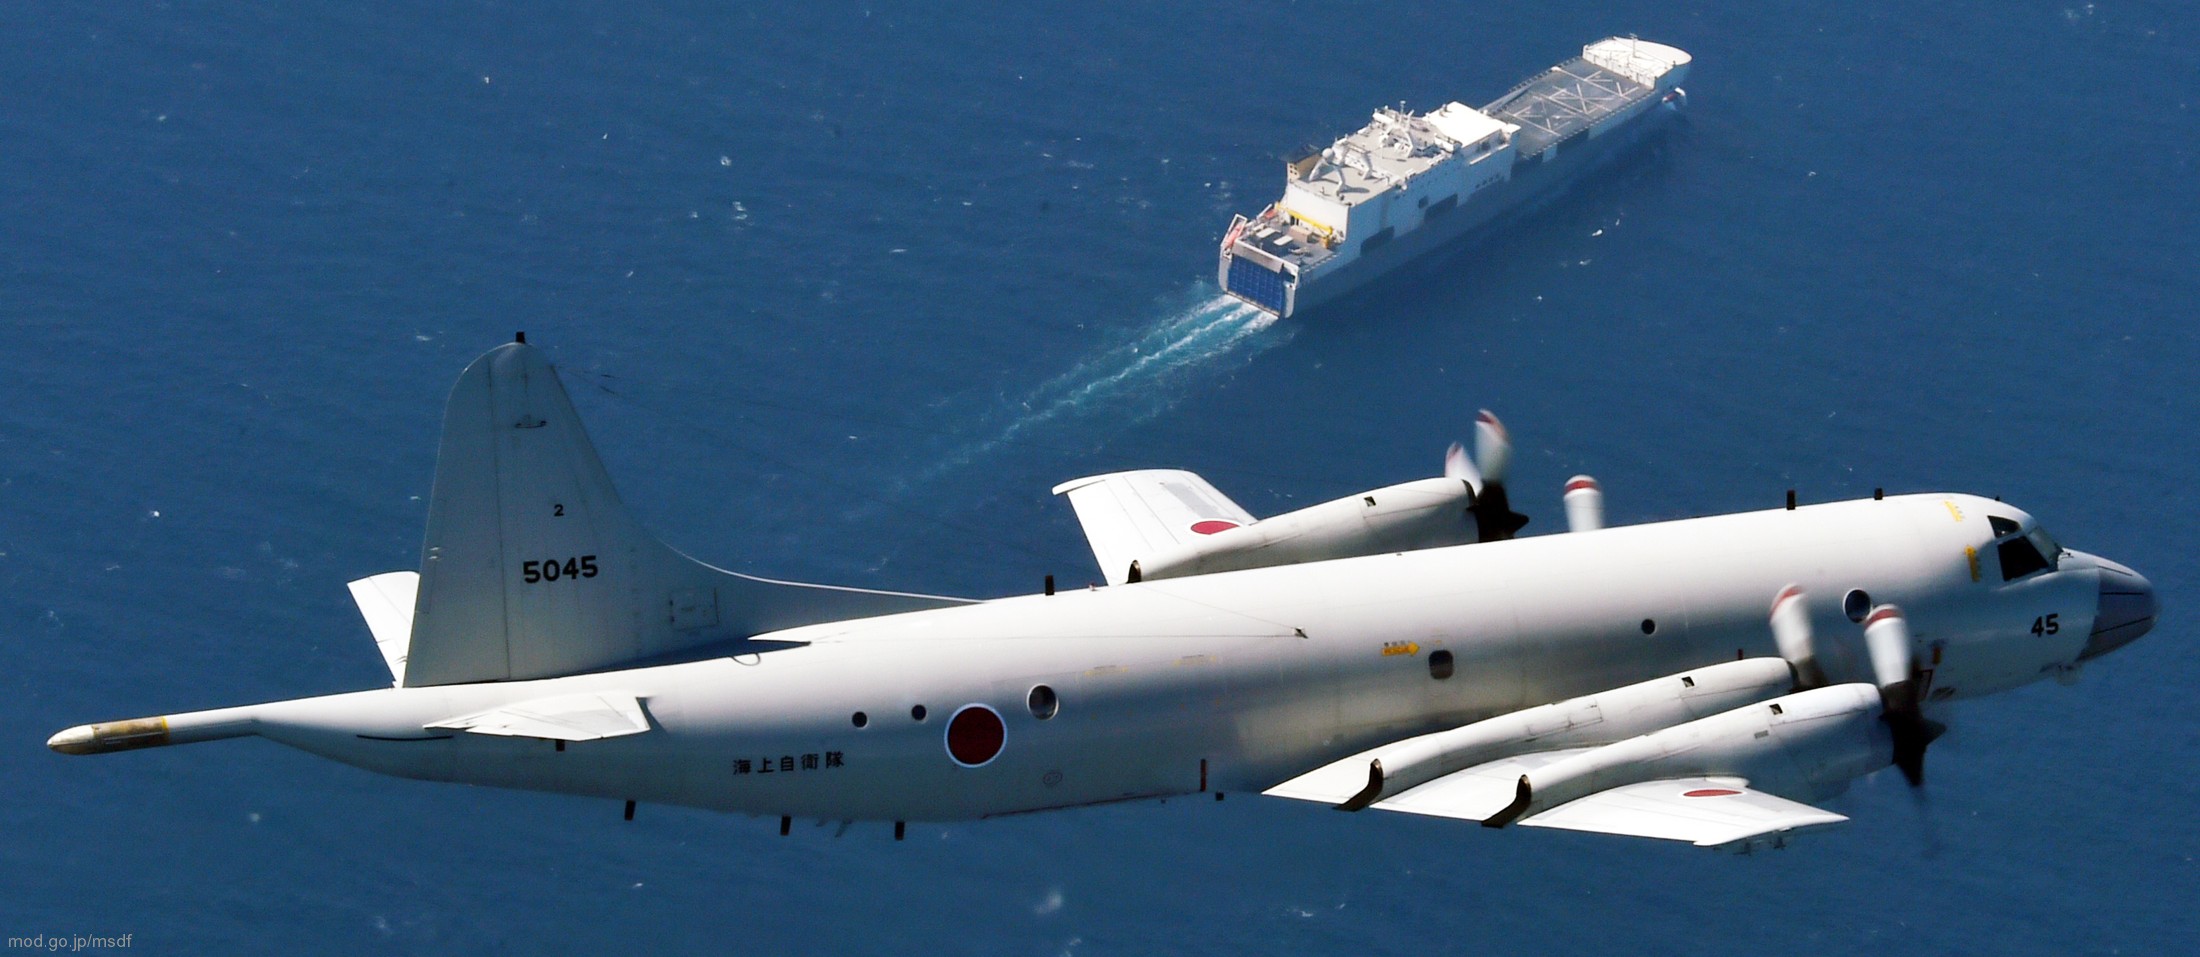 kawasaki p-3c orion patrol aircraft mpa japan maritime self defense force jmsdf 5045 02